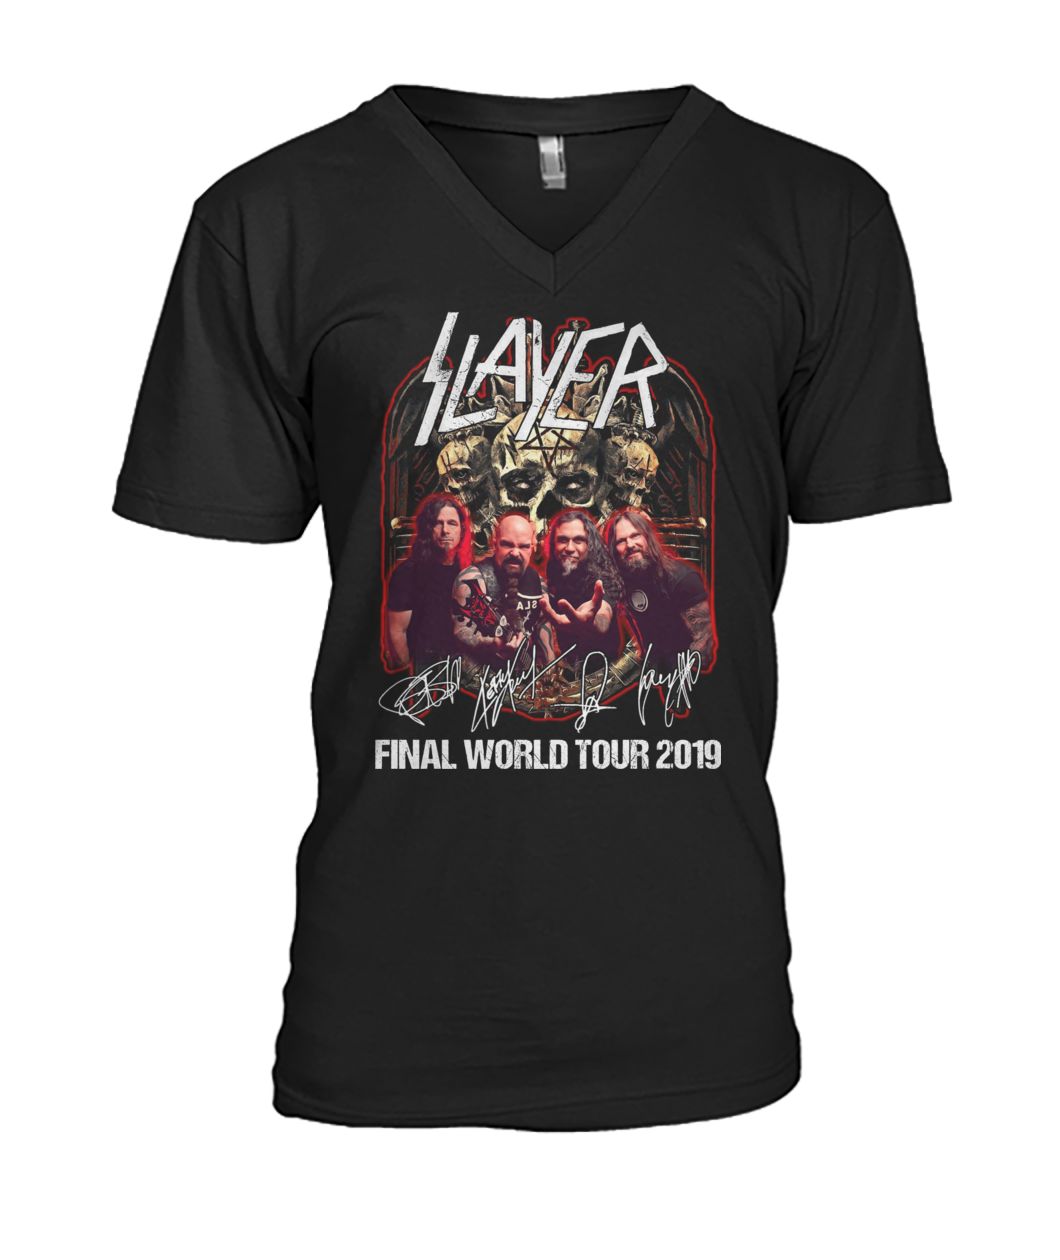 Thrash metal slayer final world tour 2019 mens v-neck